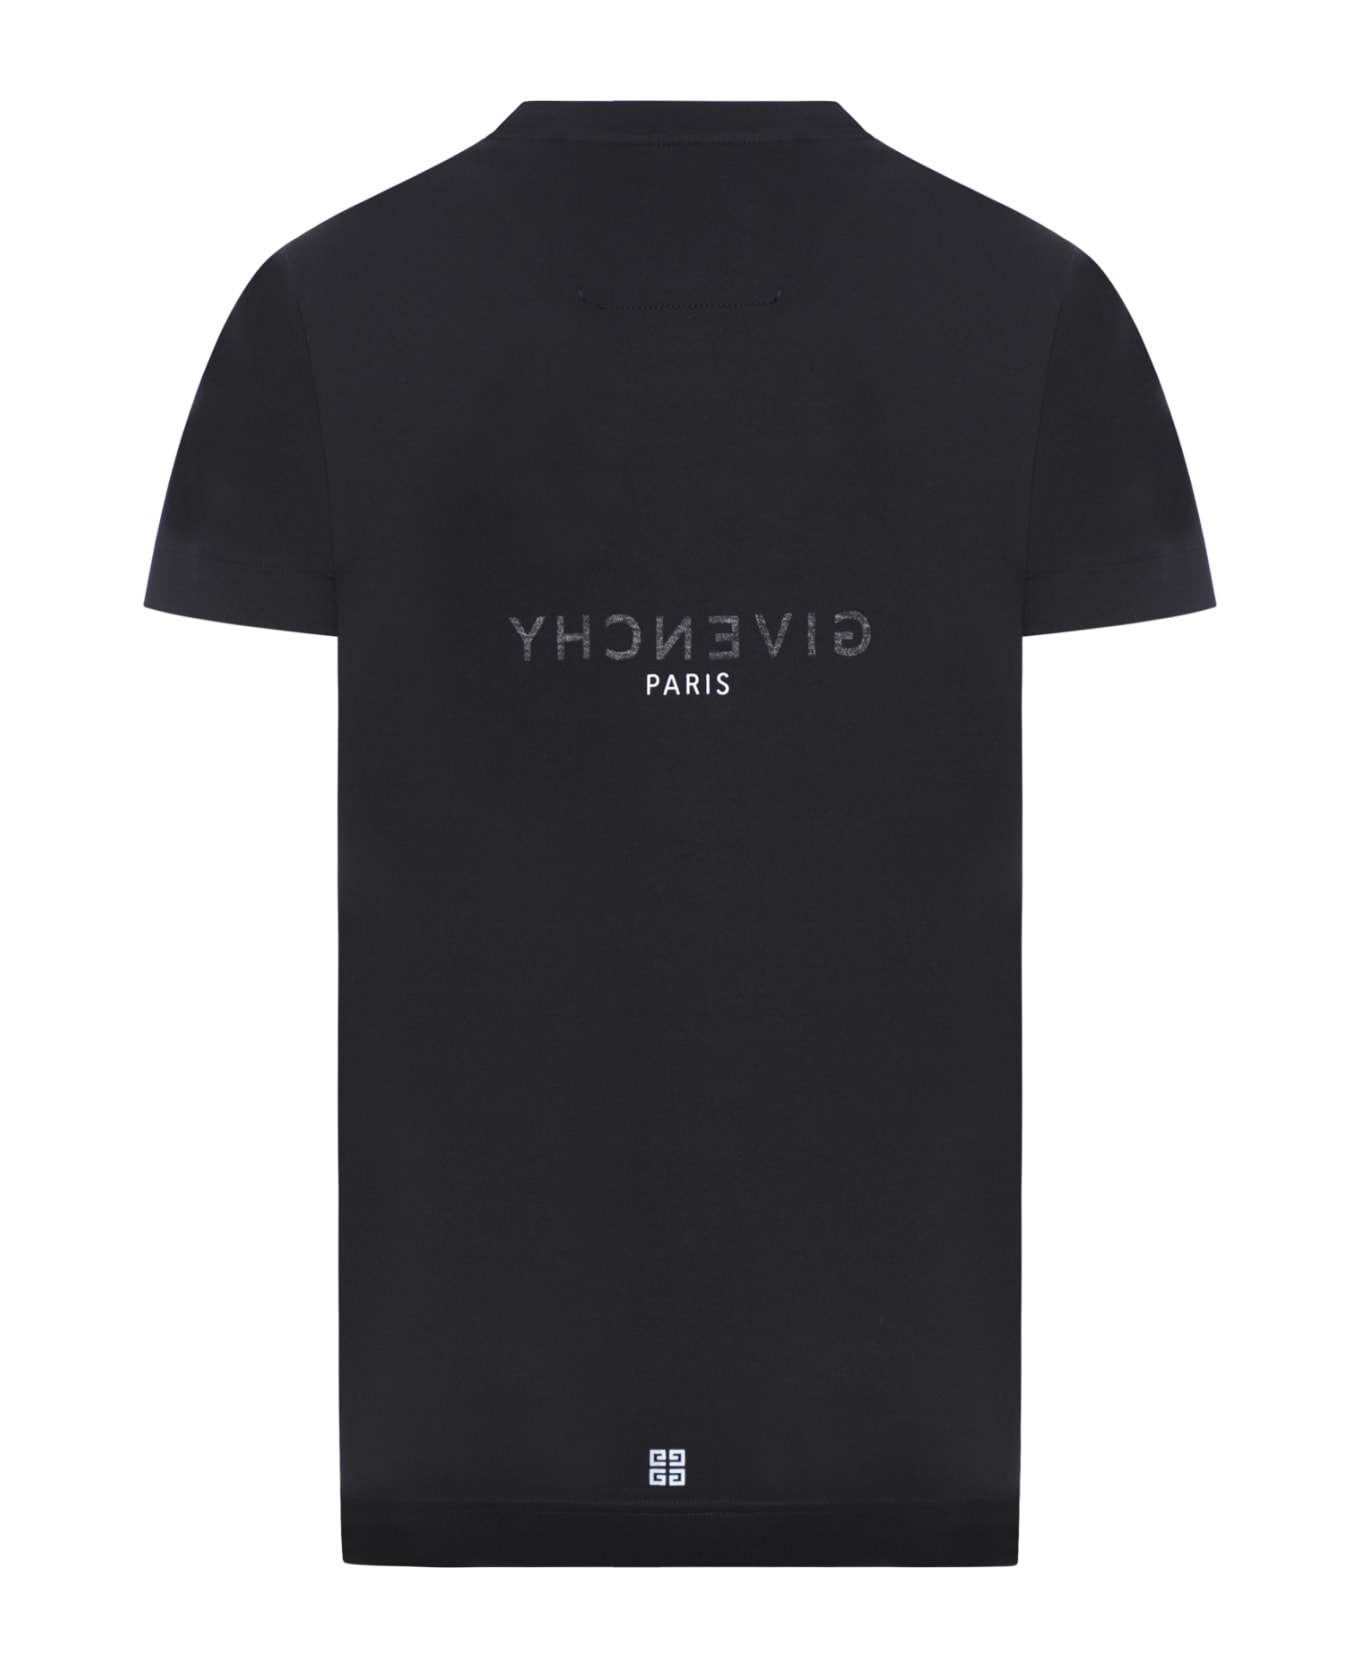 Givenchy Slim Fit Reverse Print T-shirt - Black シャツ